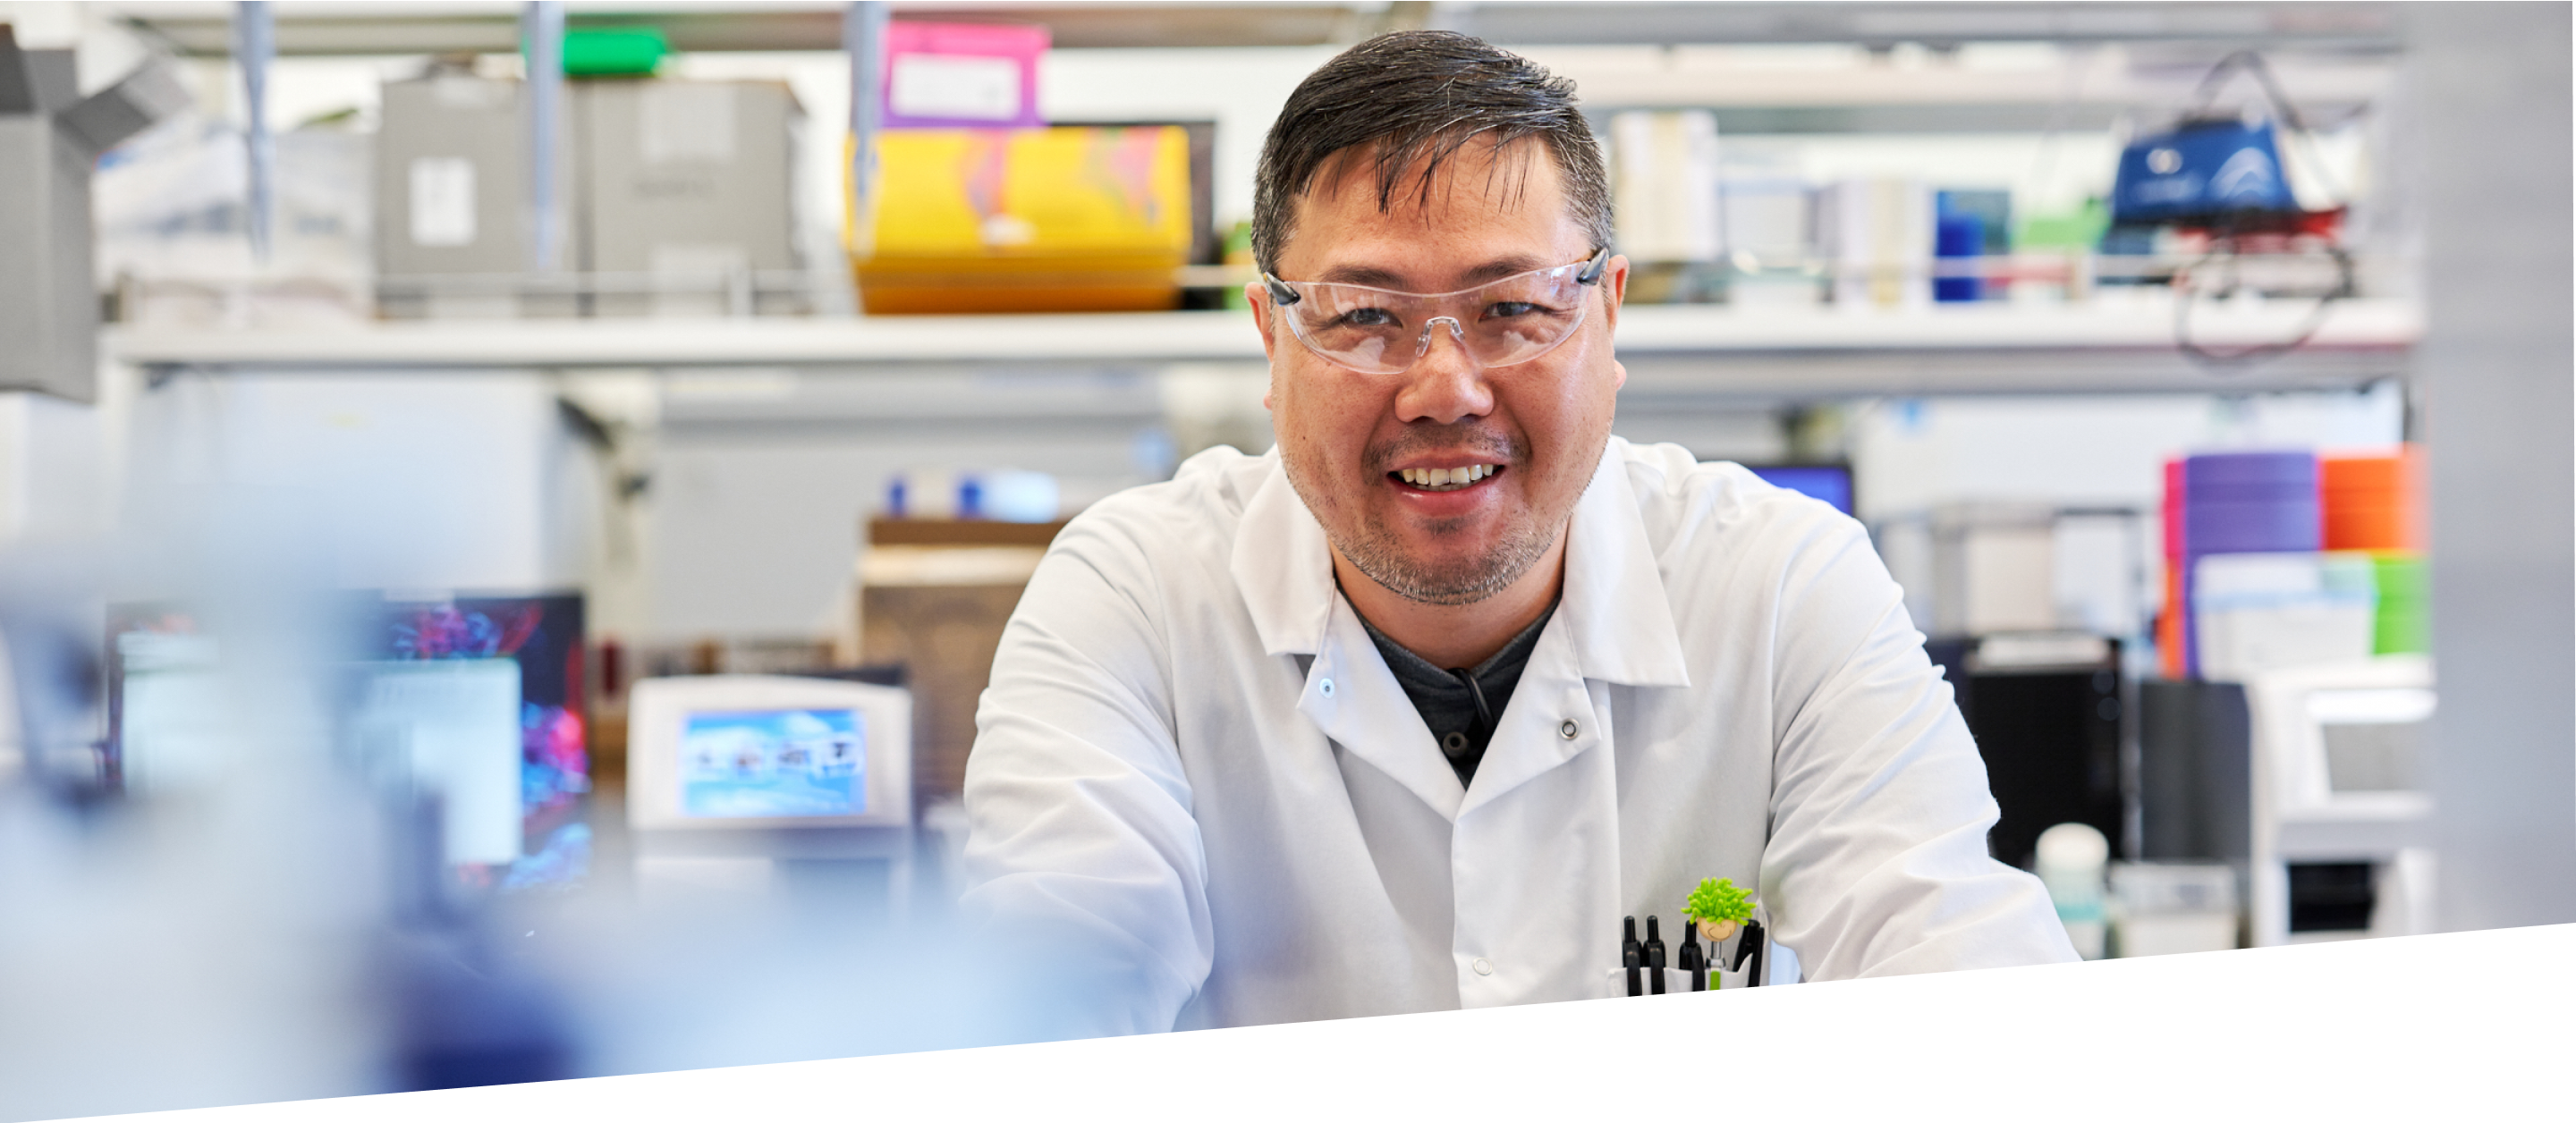 Scientist in lab smiling at camera